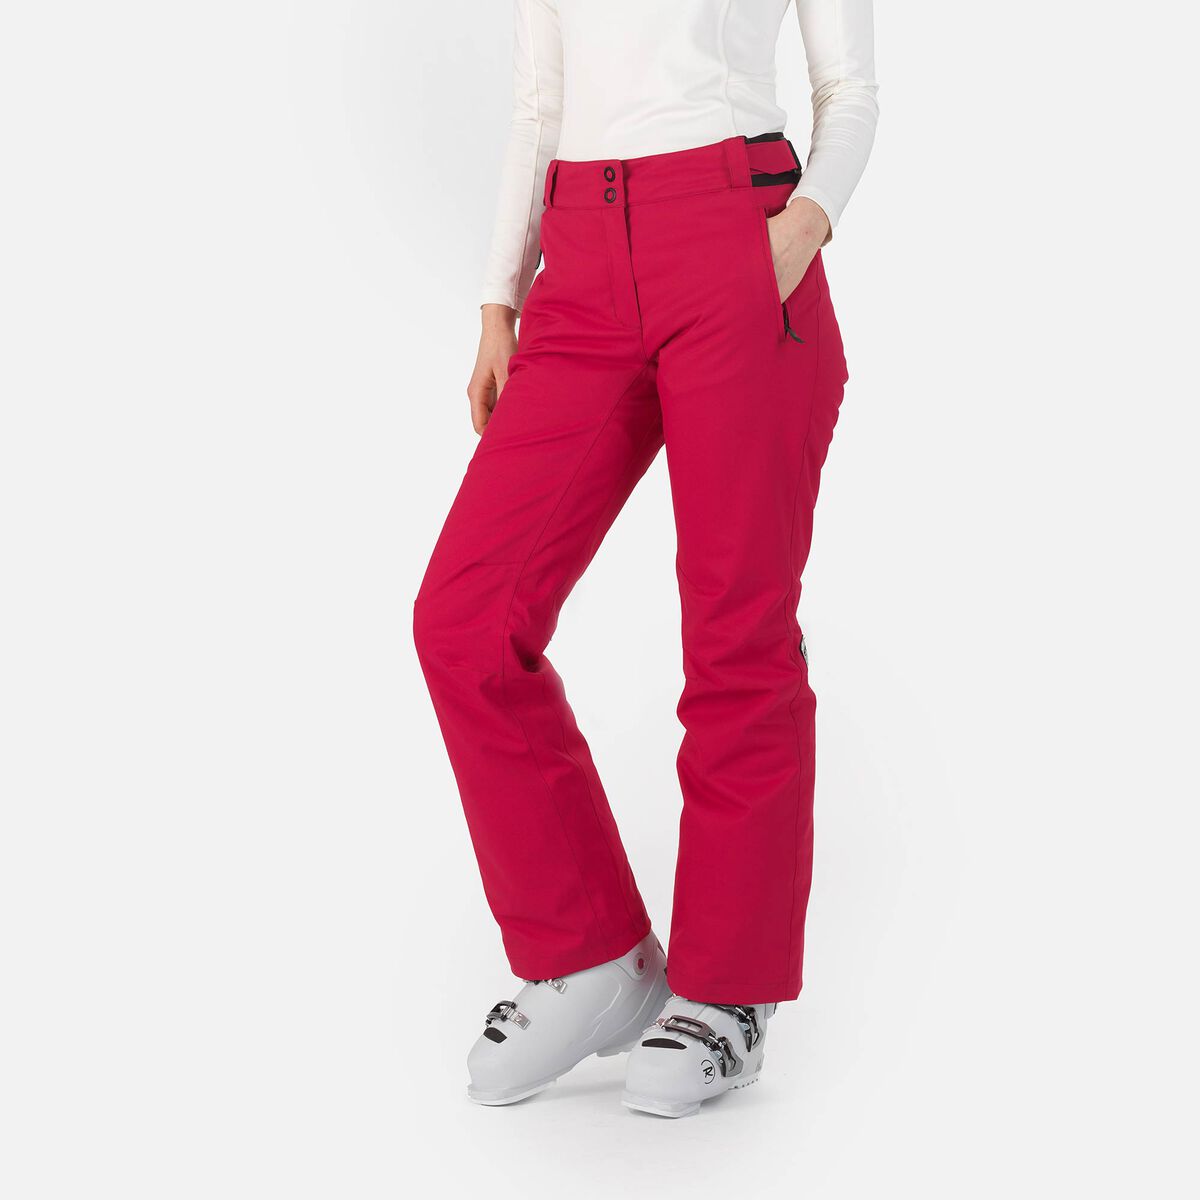 Maroon ski pants with burgundy racer stripe